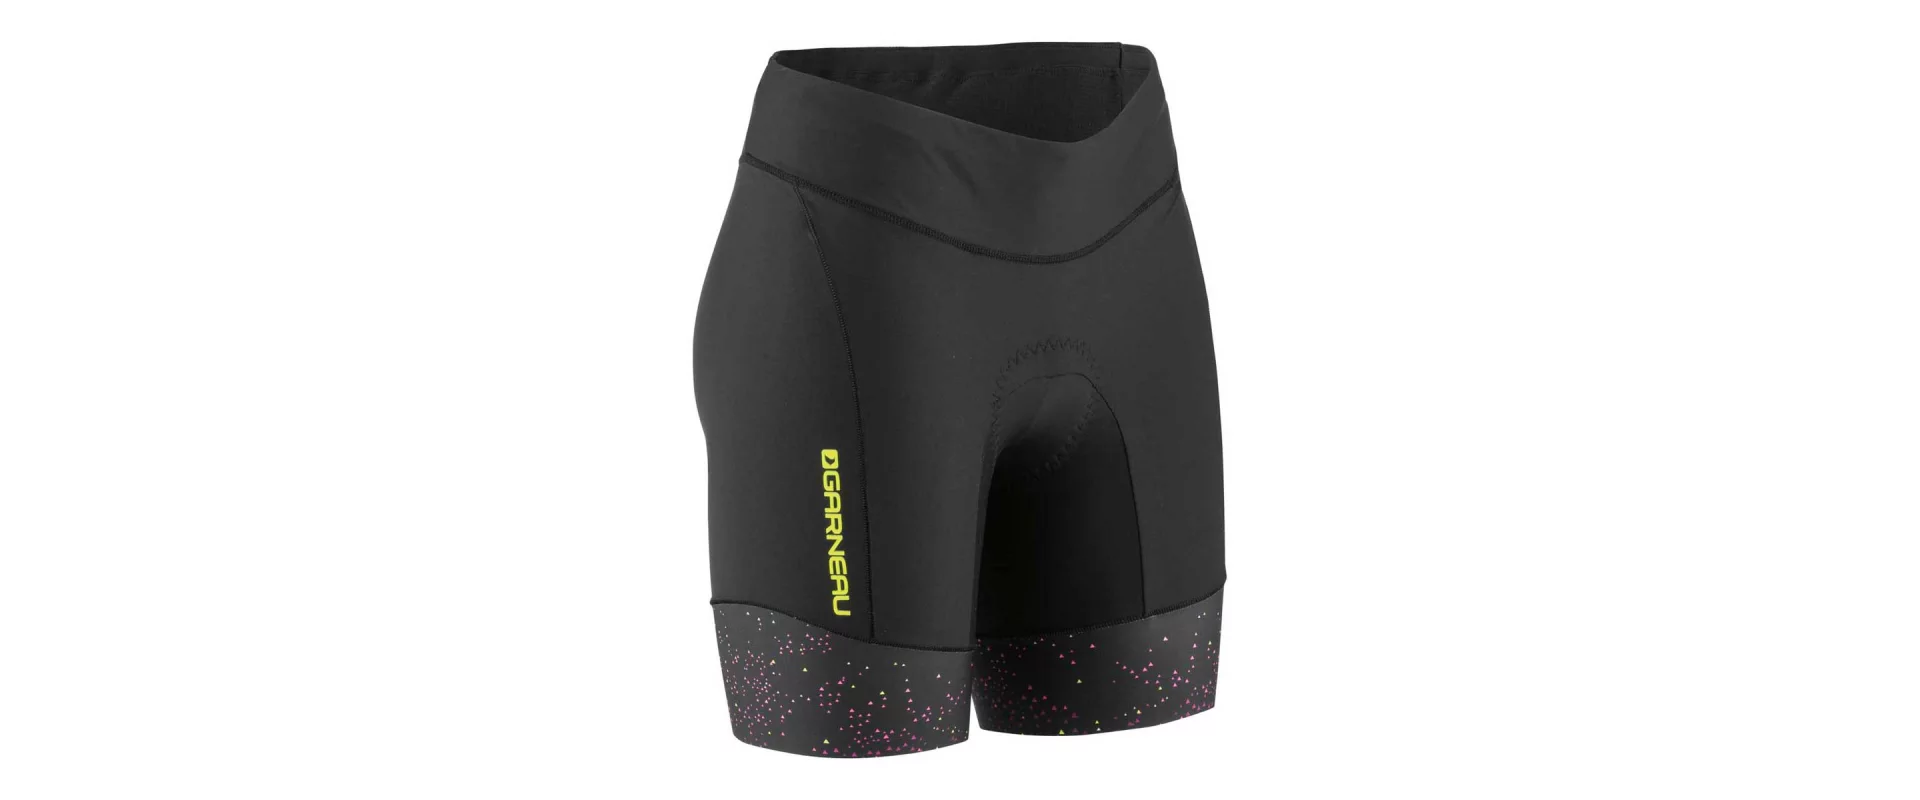 Louis Garneau Pro 6 Carbon Tri Shorts Geometry W / Женские стартовые шорты